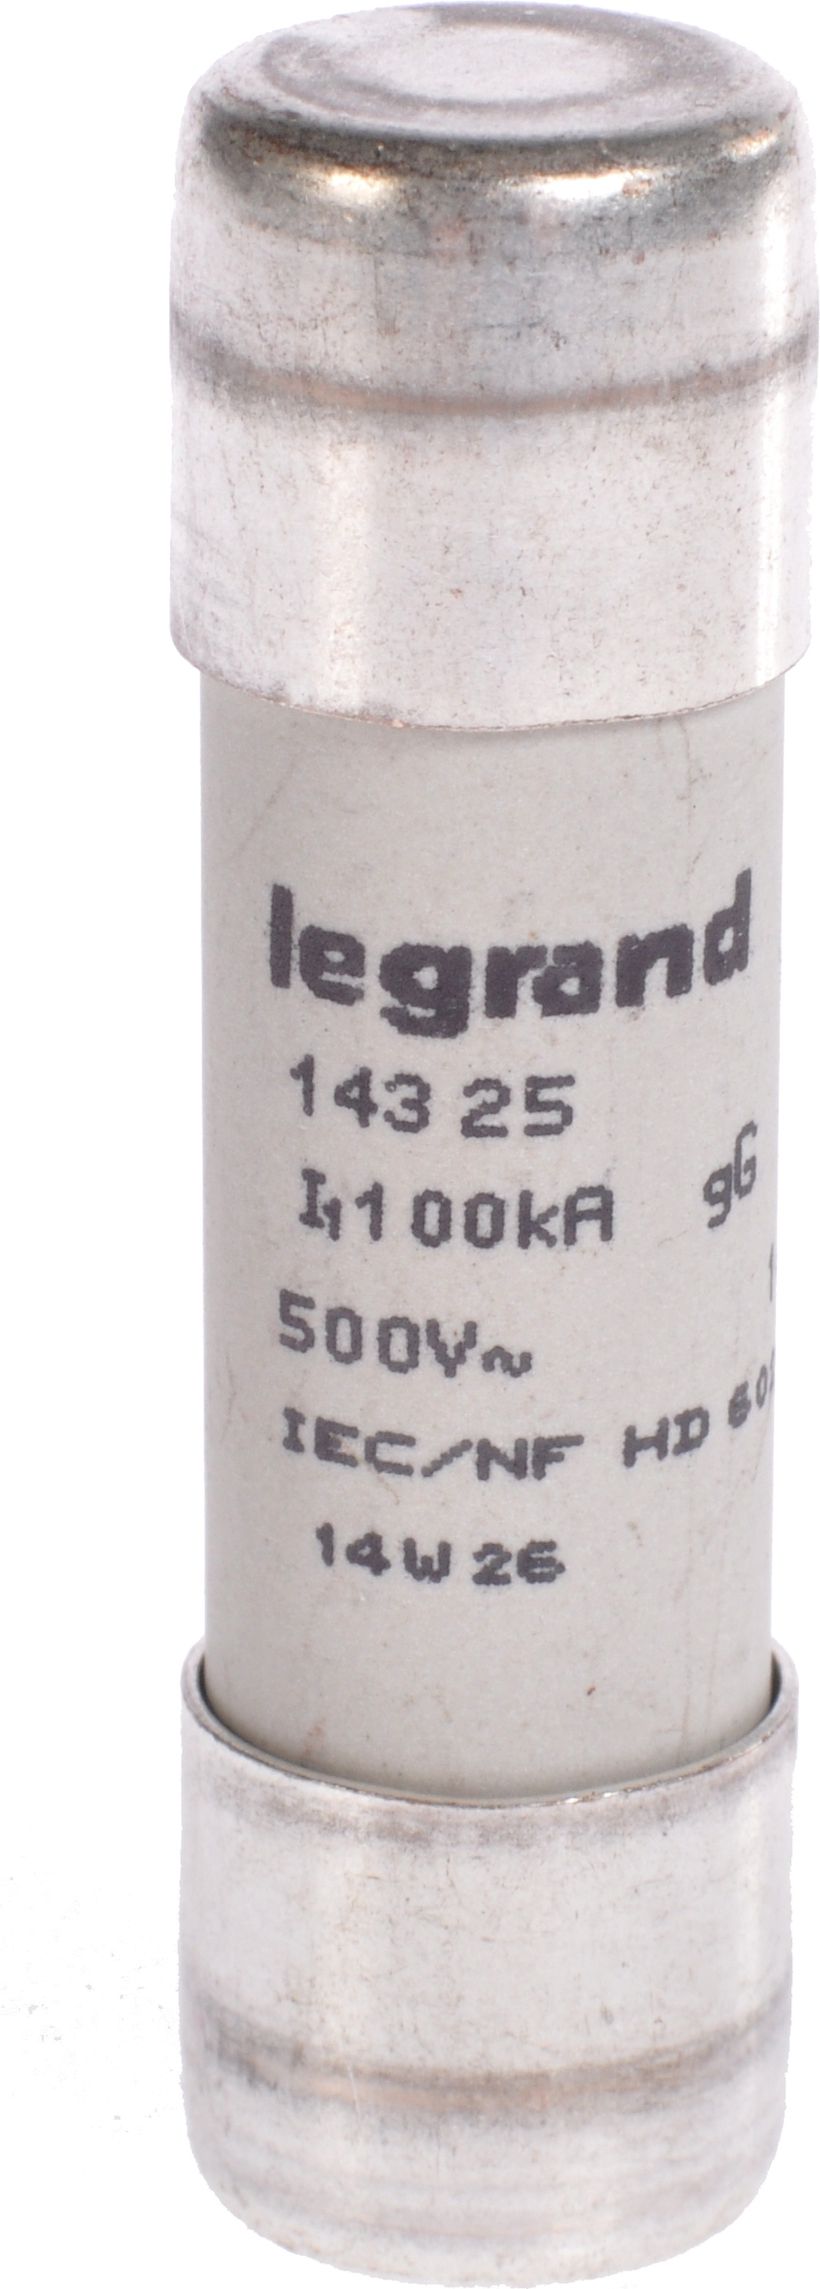 Siguranțe cilindrice 25A gL 500V HPC 14 x 51mm (014325)